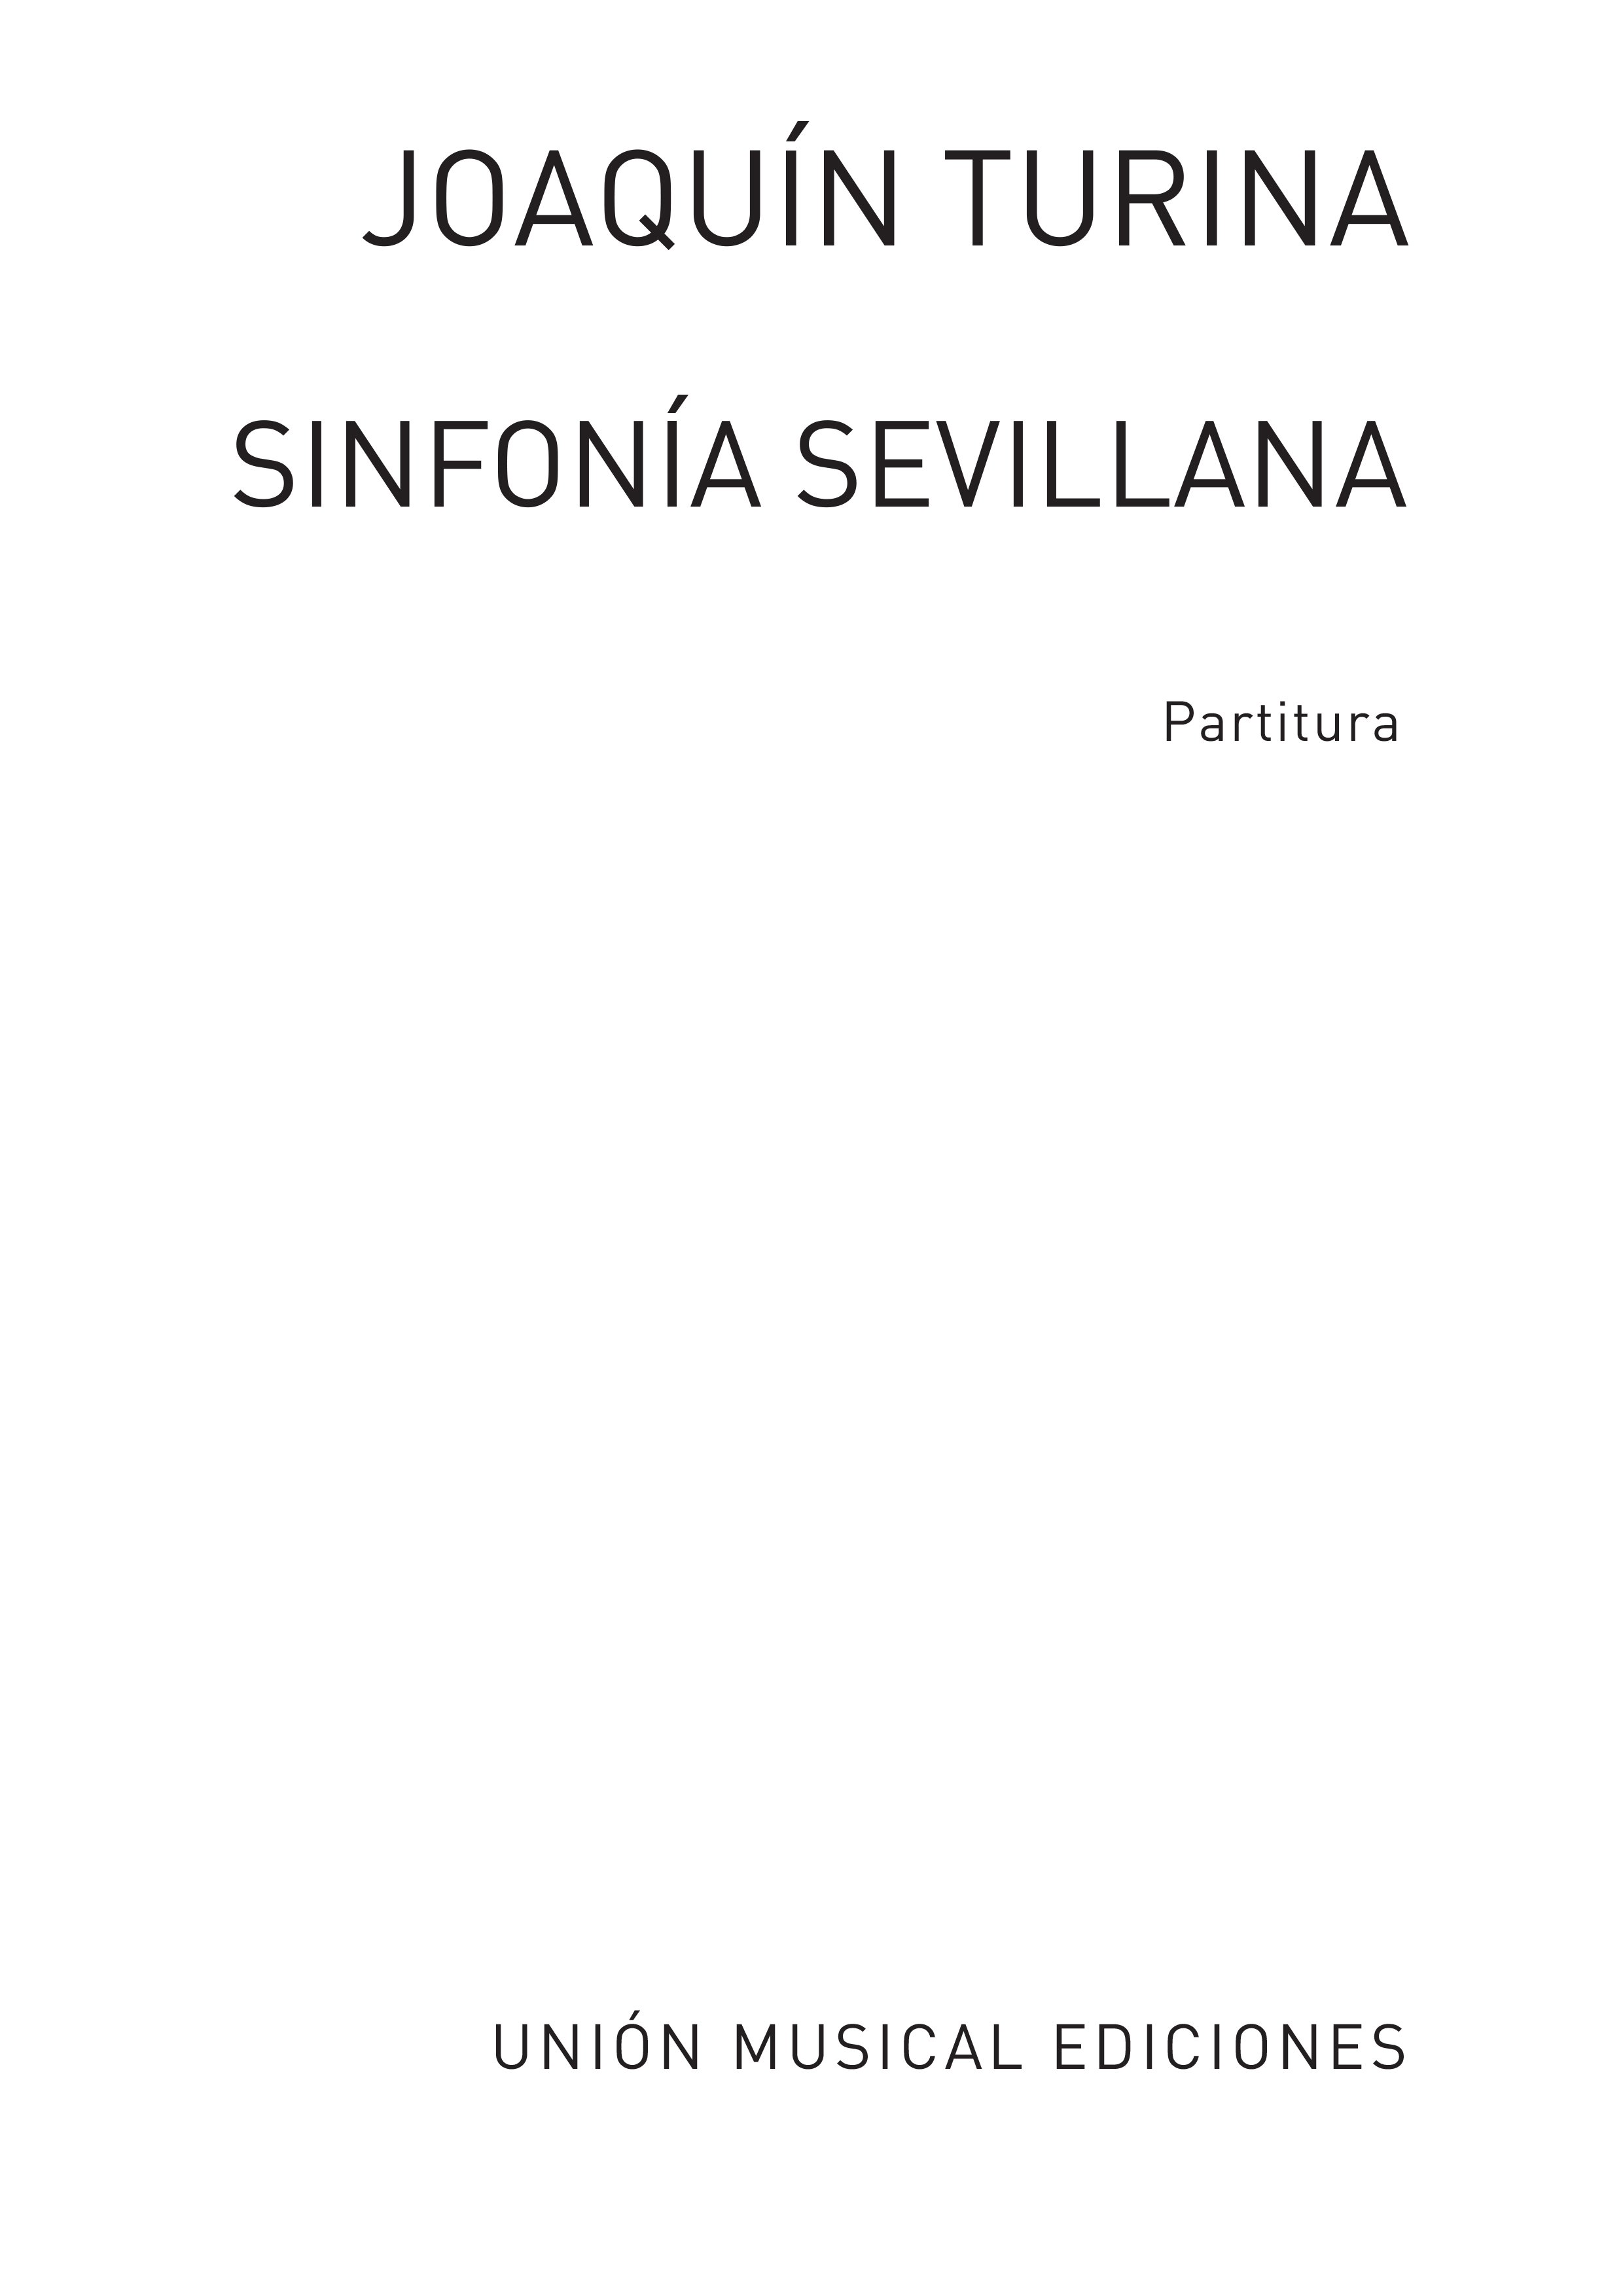 Joaqun Turina: Sinfonia Sevillana: Orchestra: Miniature Score